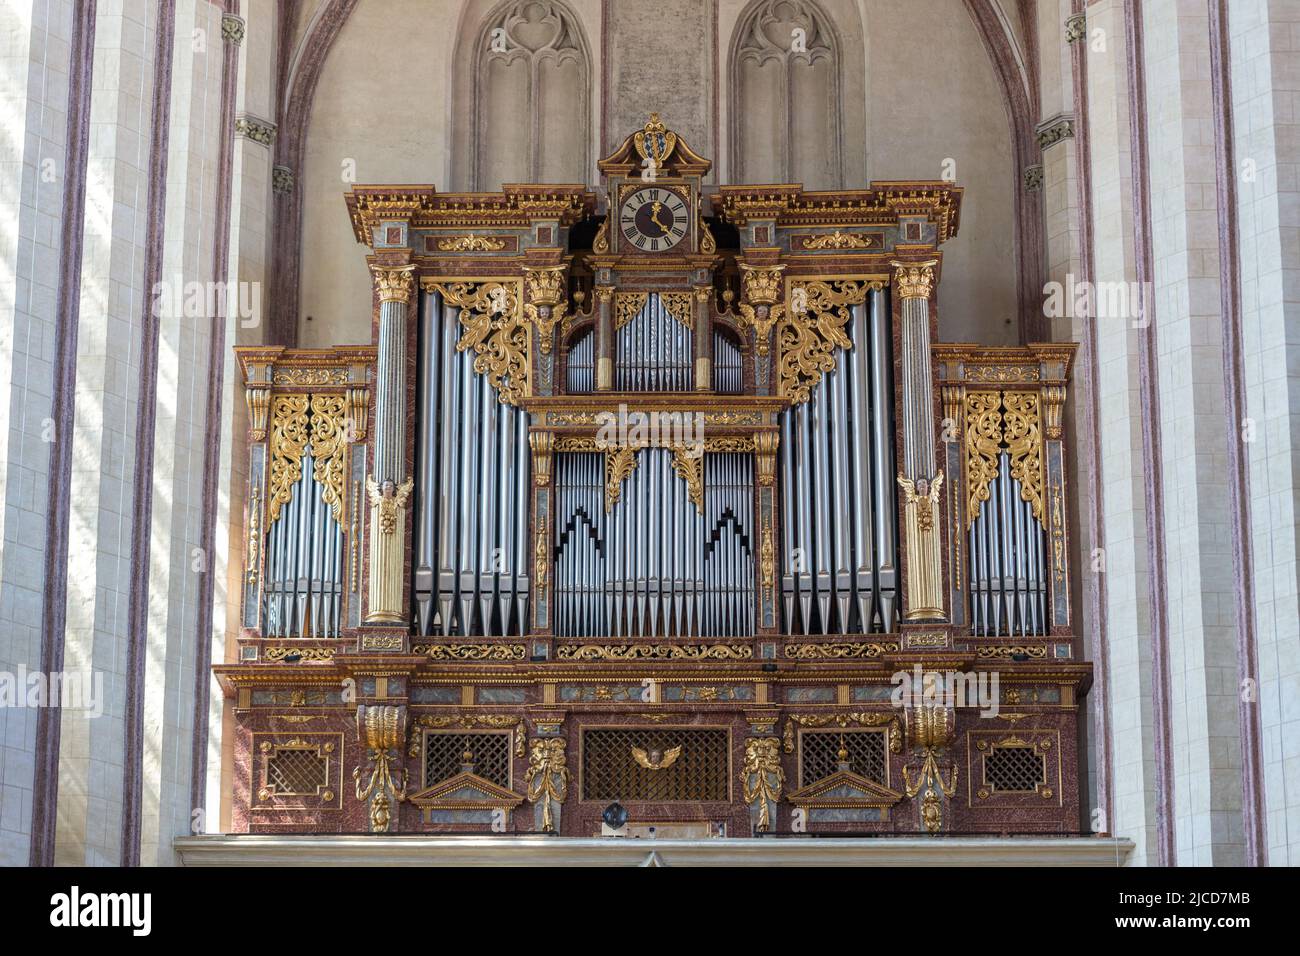 Landshut, Germany - Aug 14, 2021: Organ inside basilica St. Martin. Stock Photo